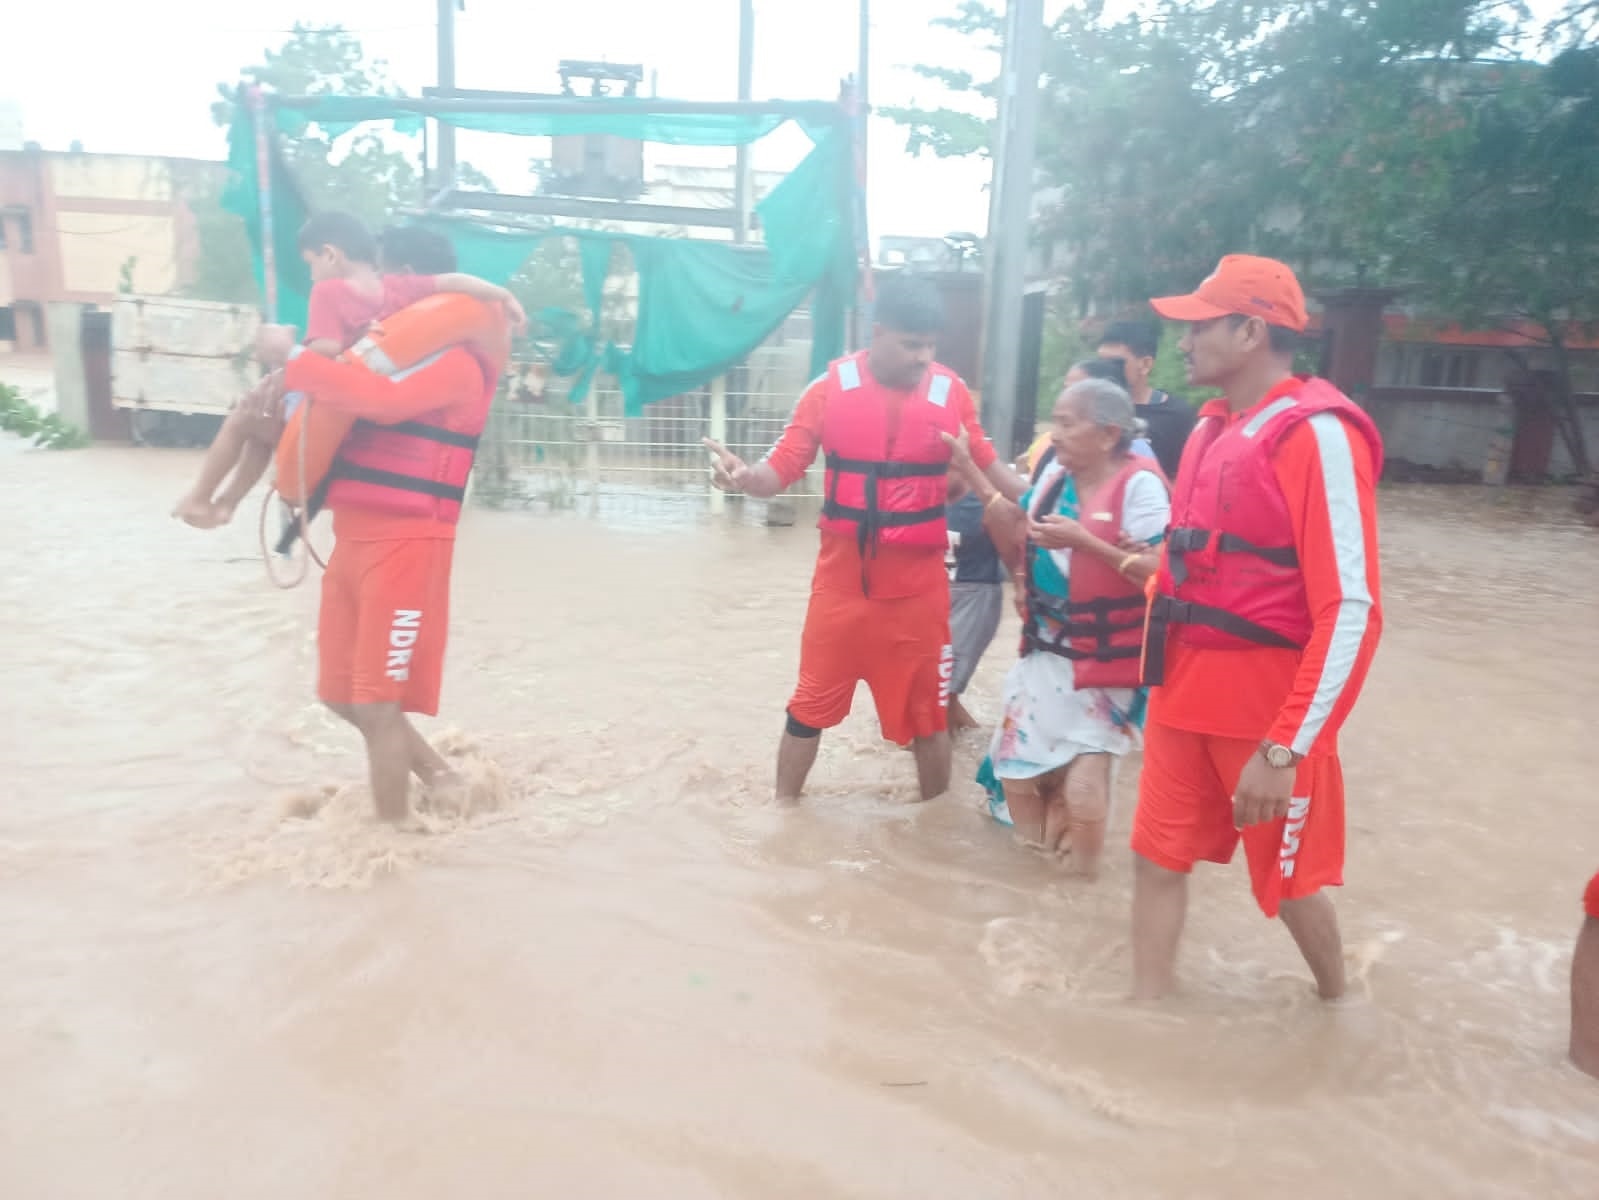 Rain: માંડવીમાં NDRFનું દિલધડક રેસ્ક્યુ ઓપરેશન, કેડસમા પાણીમાં જઇને છ લોકોને બચાવ્યા